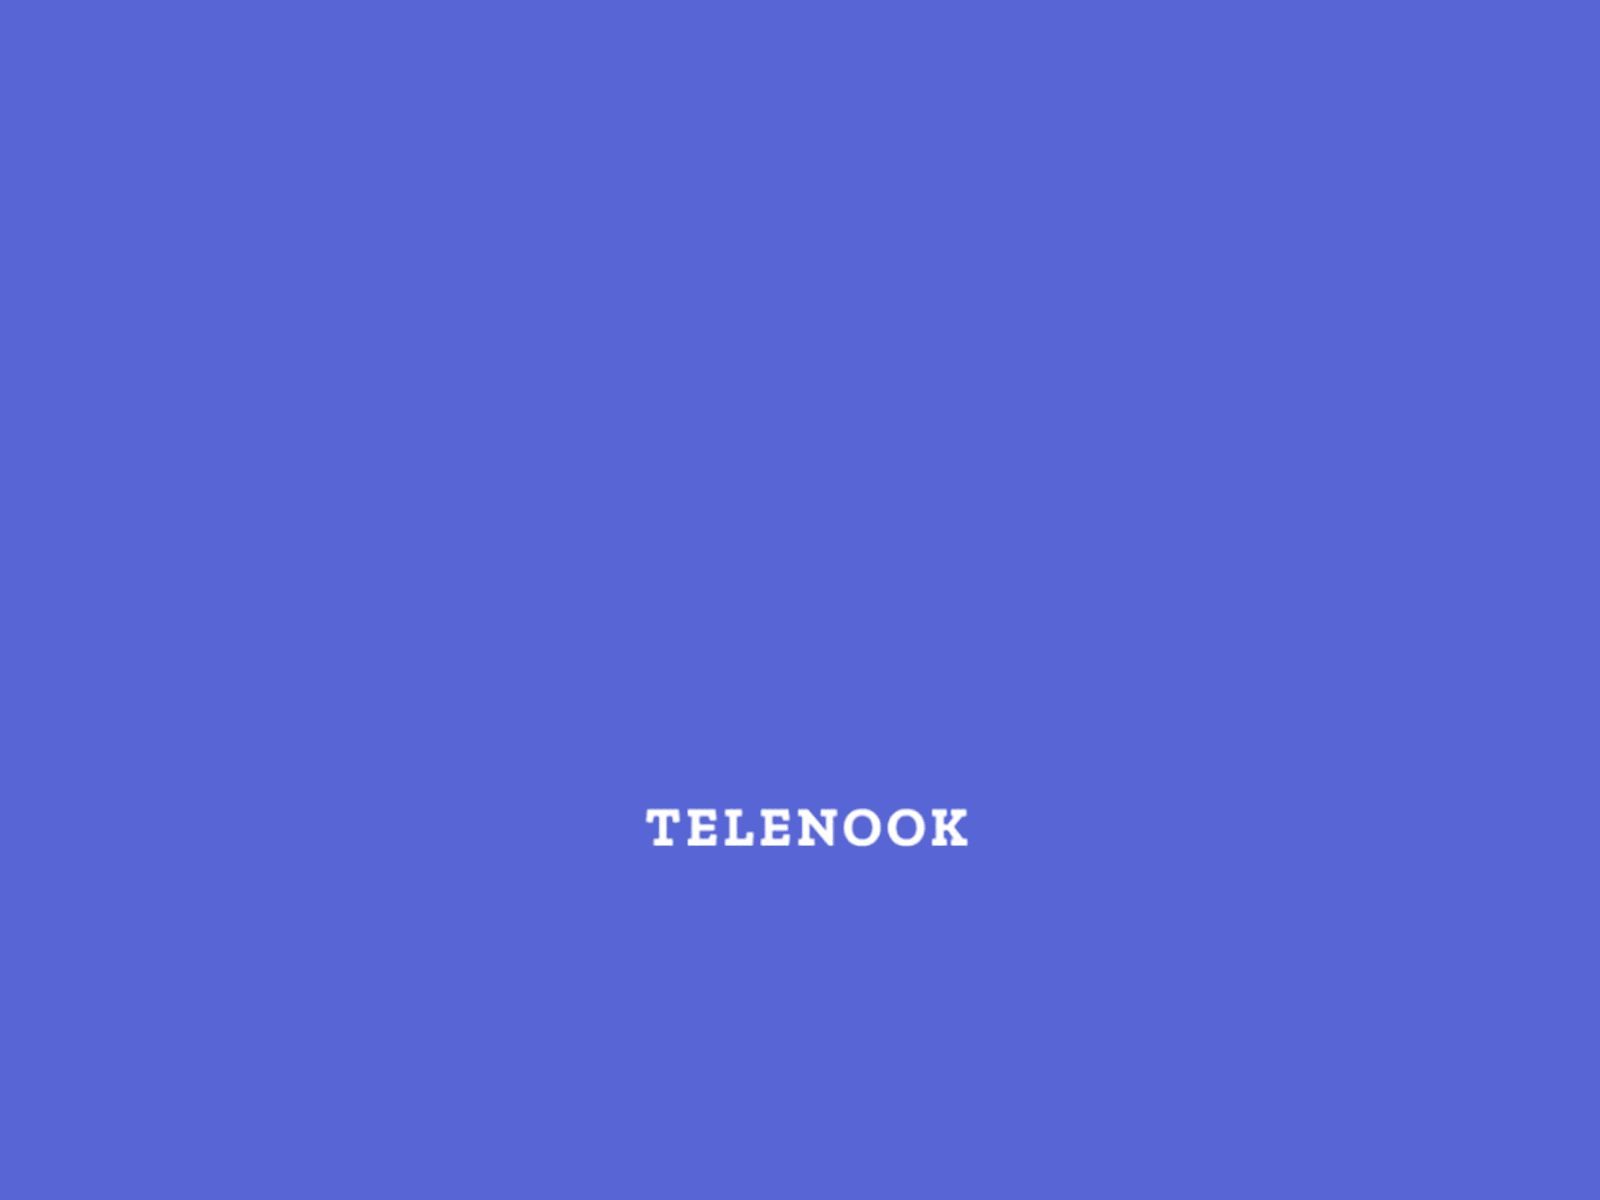 TeleNook App Loading Animation